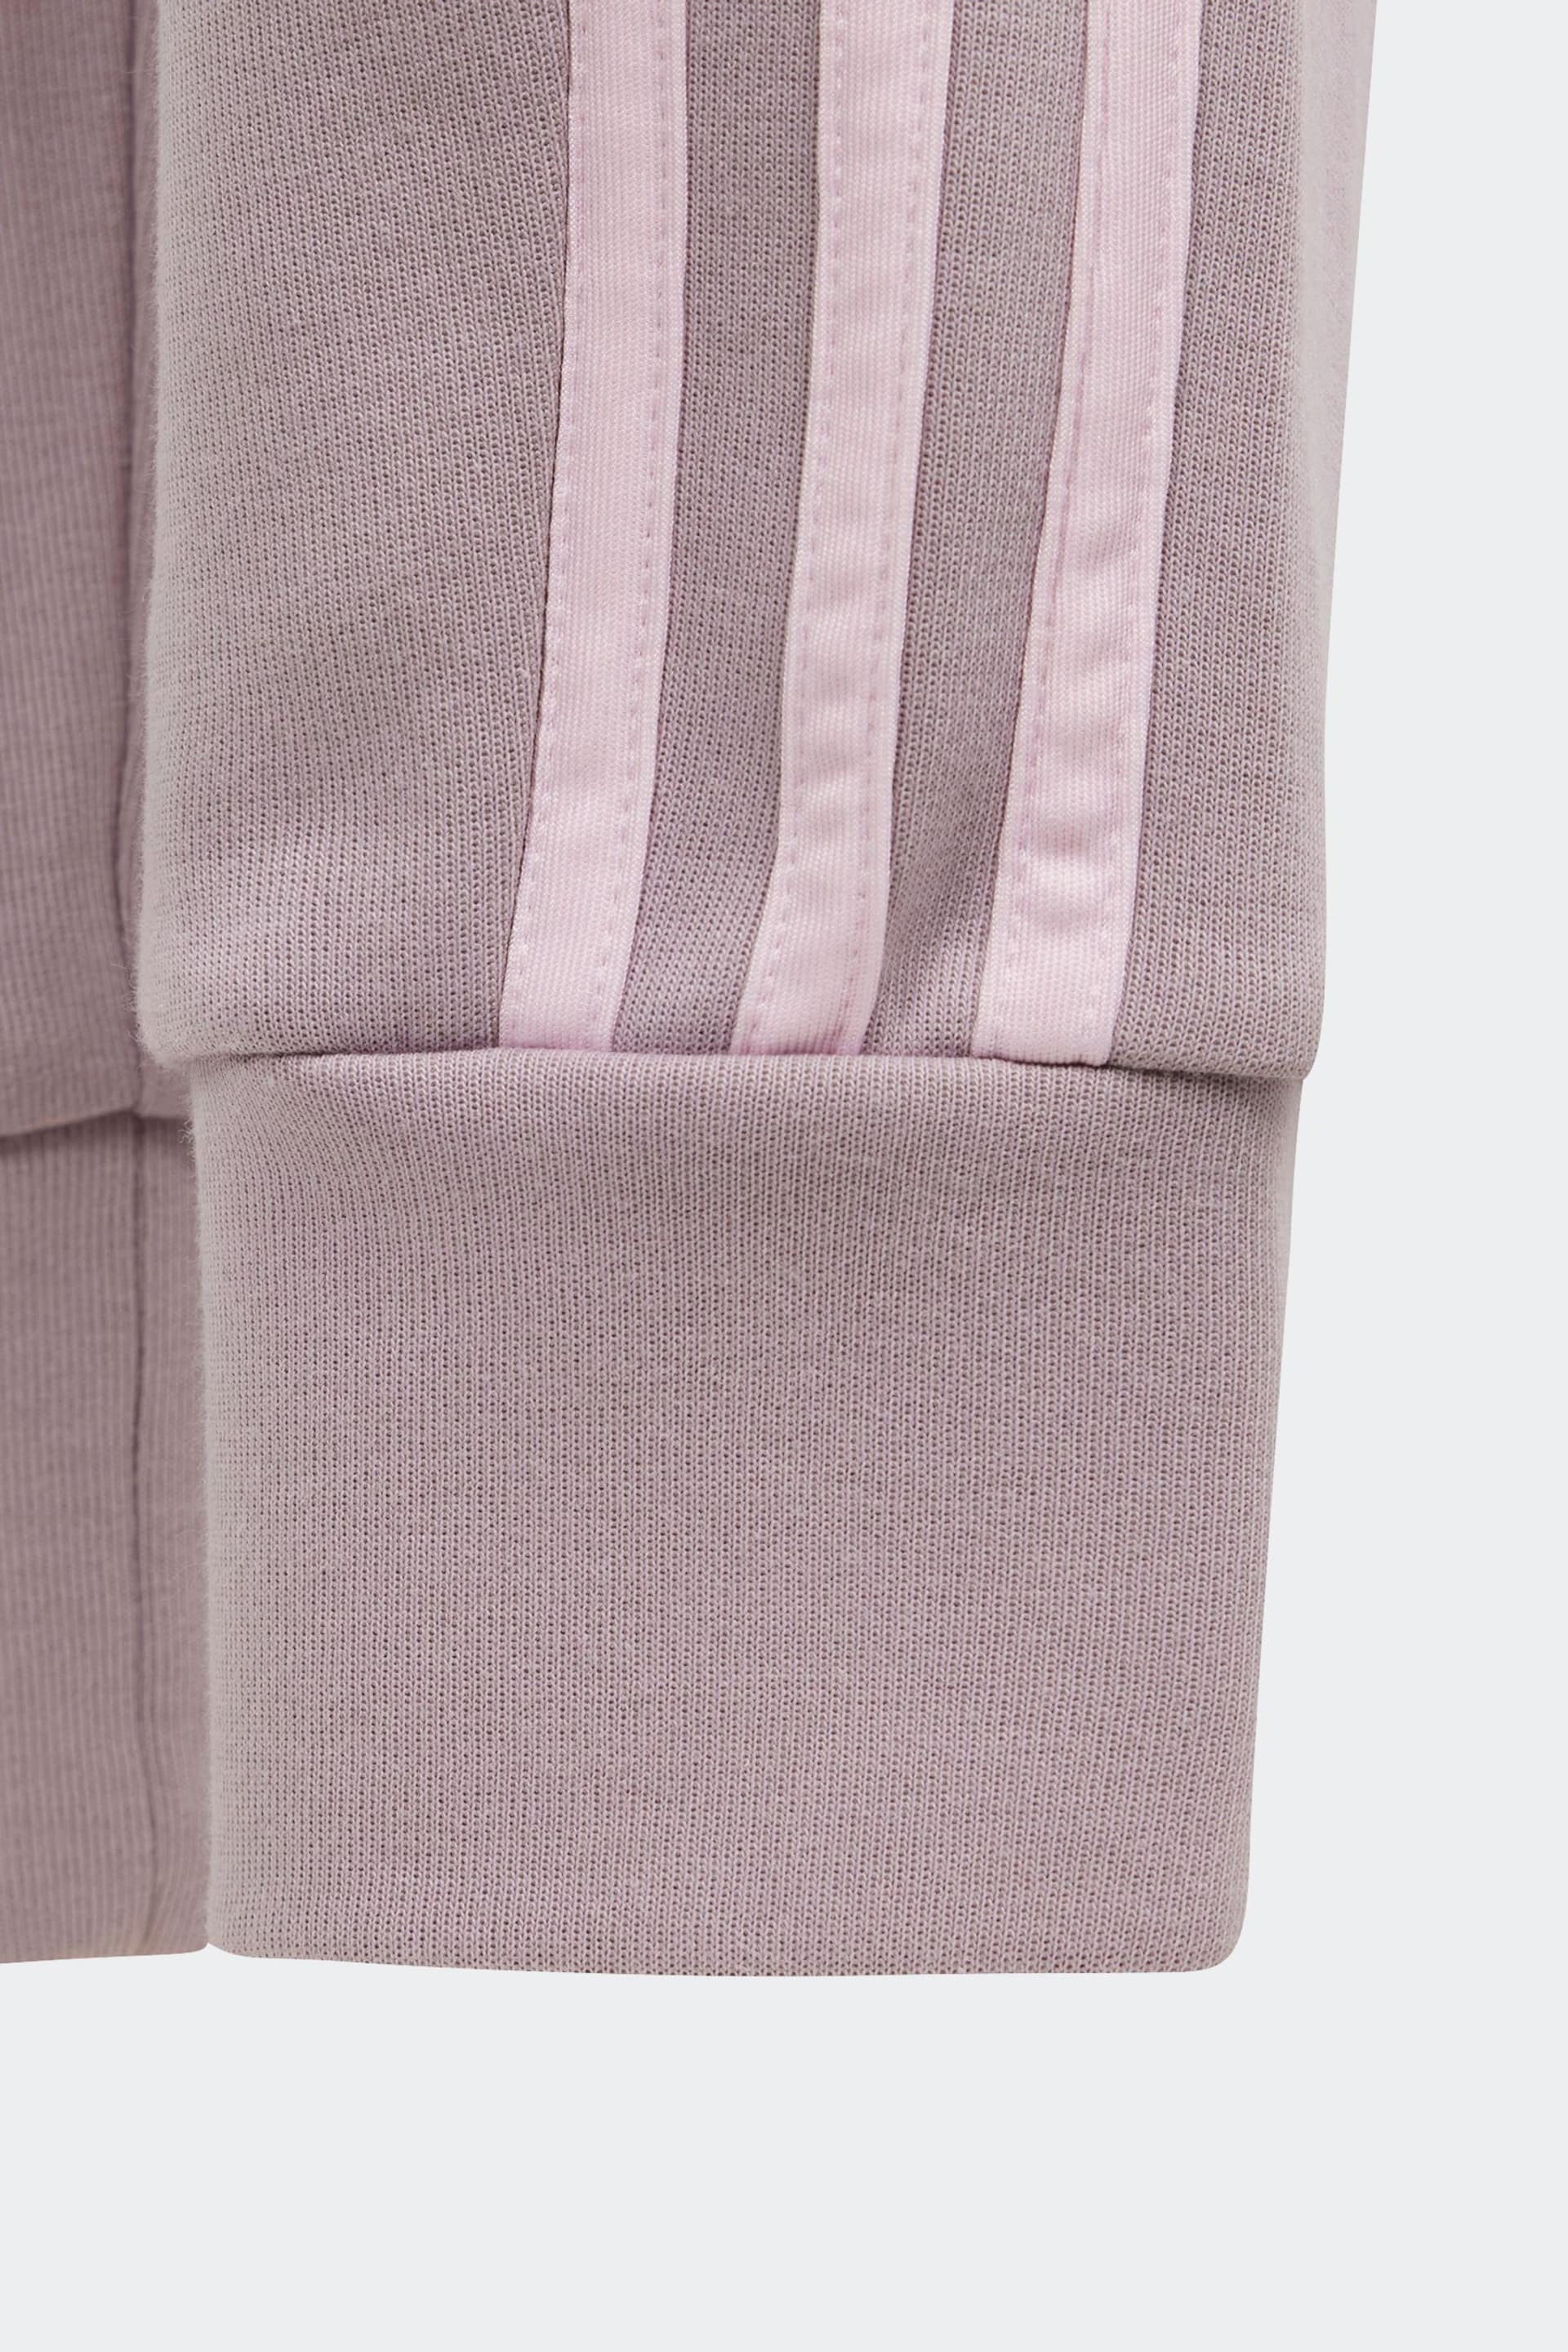 adidas Purple Sportswear Future Icons 3-Stripes Cotton Joggers - Image 5 of 5